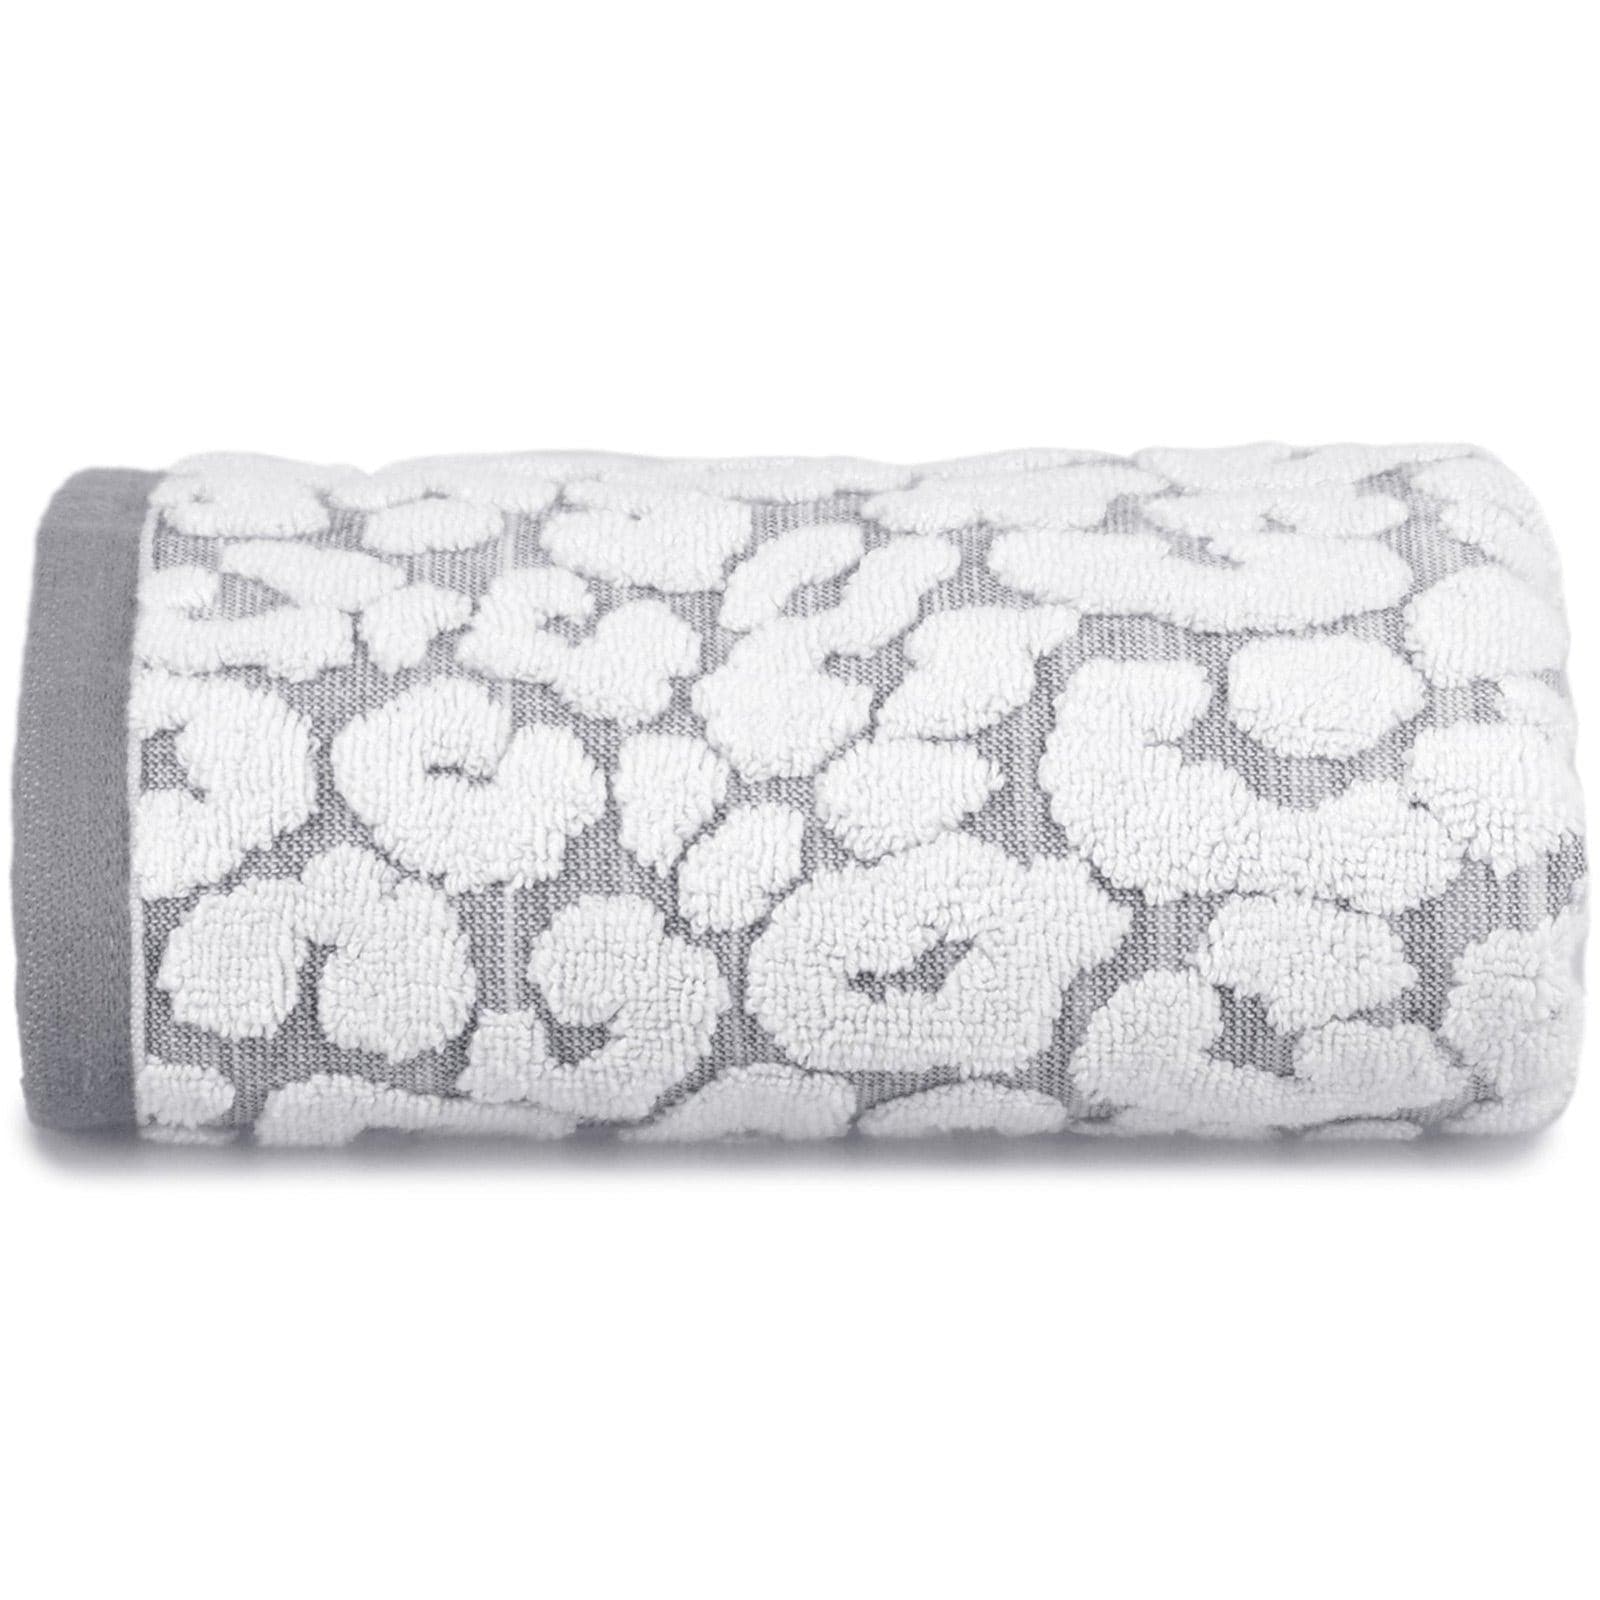 Allure Leopard Hand Towel, 100% Cotton, Luxury Jacquard Print, Soft &  Absorbent, 50cm x 90cm (Natural) : : Home & Kitchen